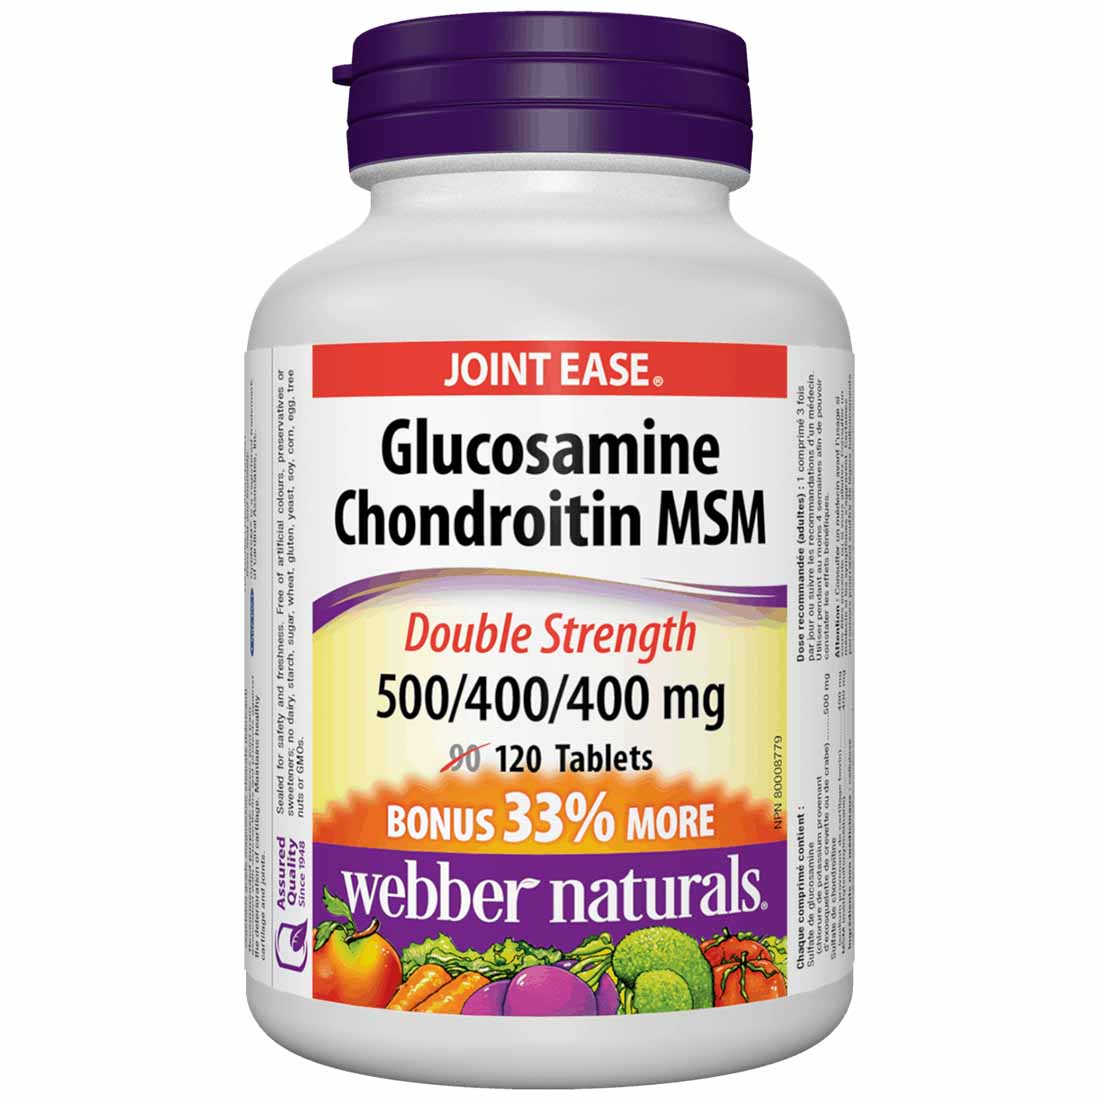 Webber Naturals Glucosamine Chondroitin MSM, Double Strength, 500mg/400mg/400mg, BONUS SIZE 33% More, 90+30 Tablets